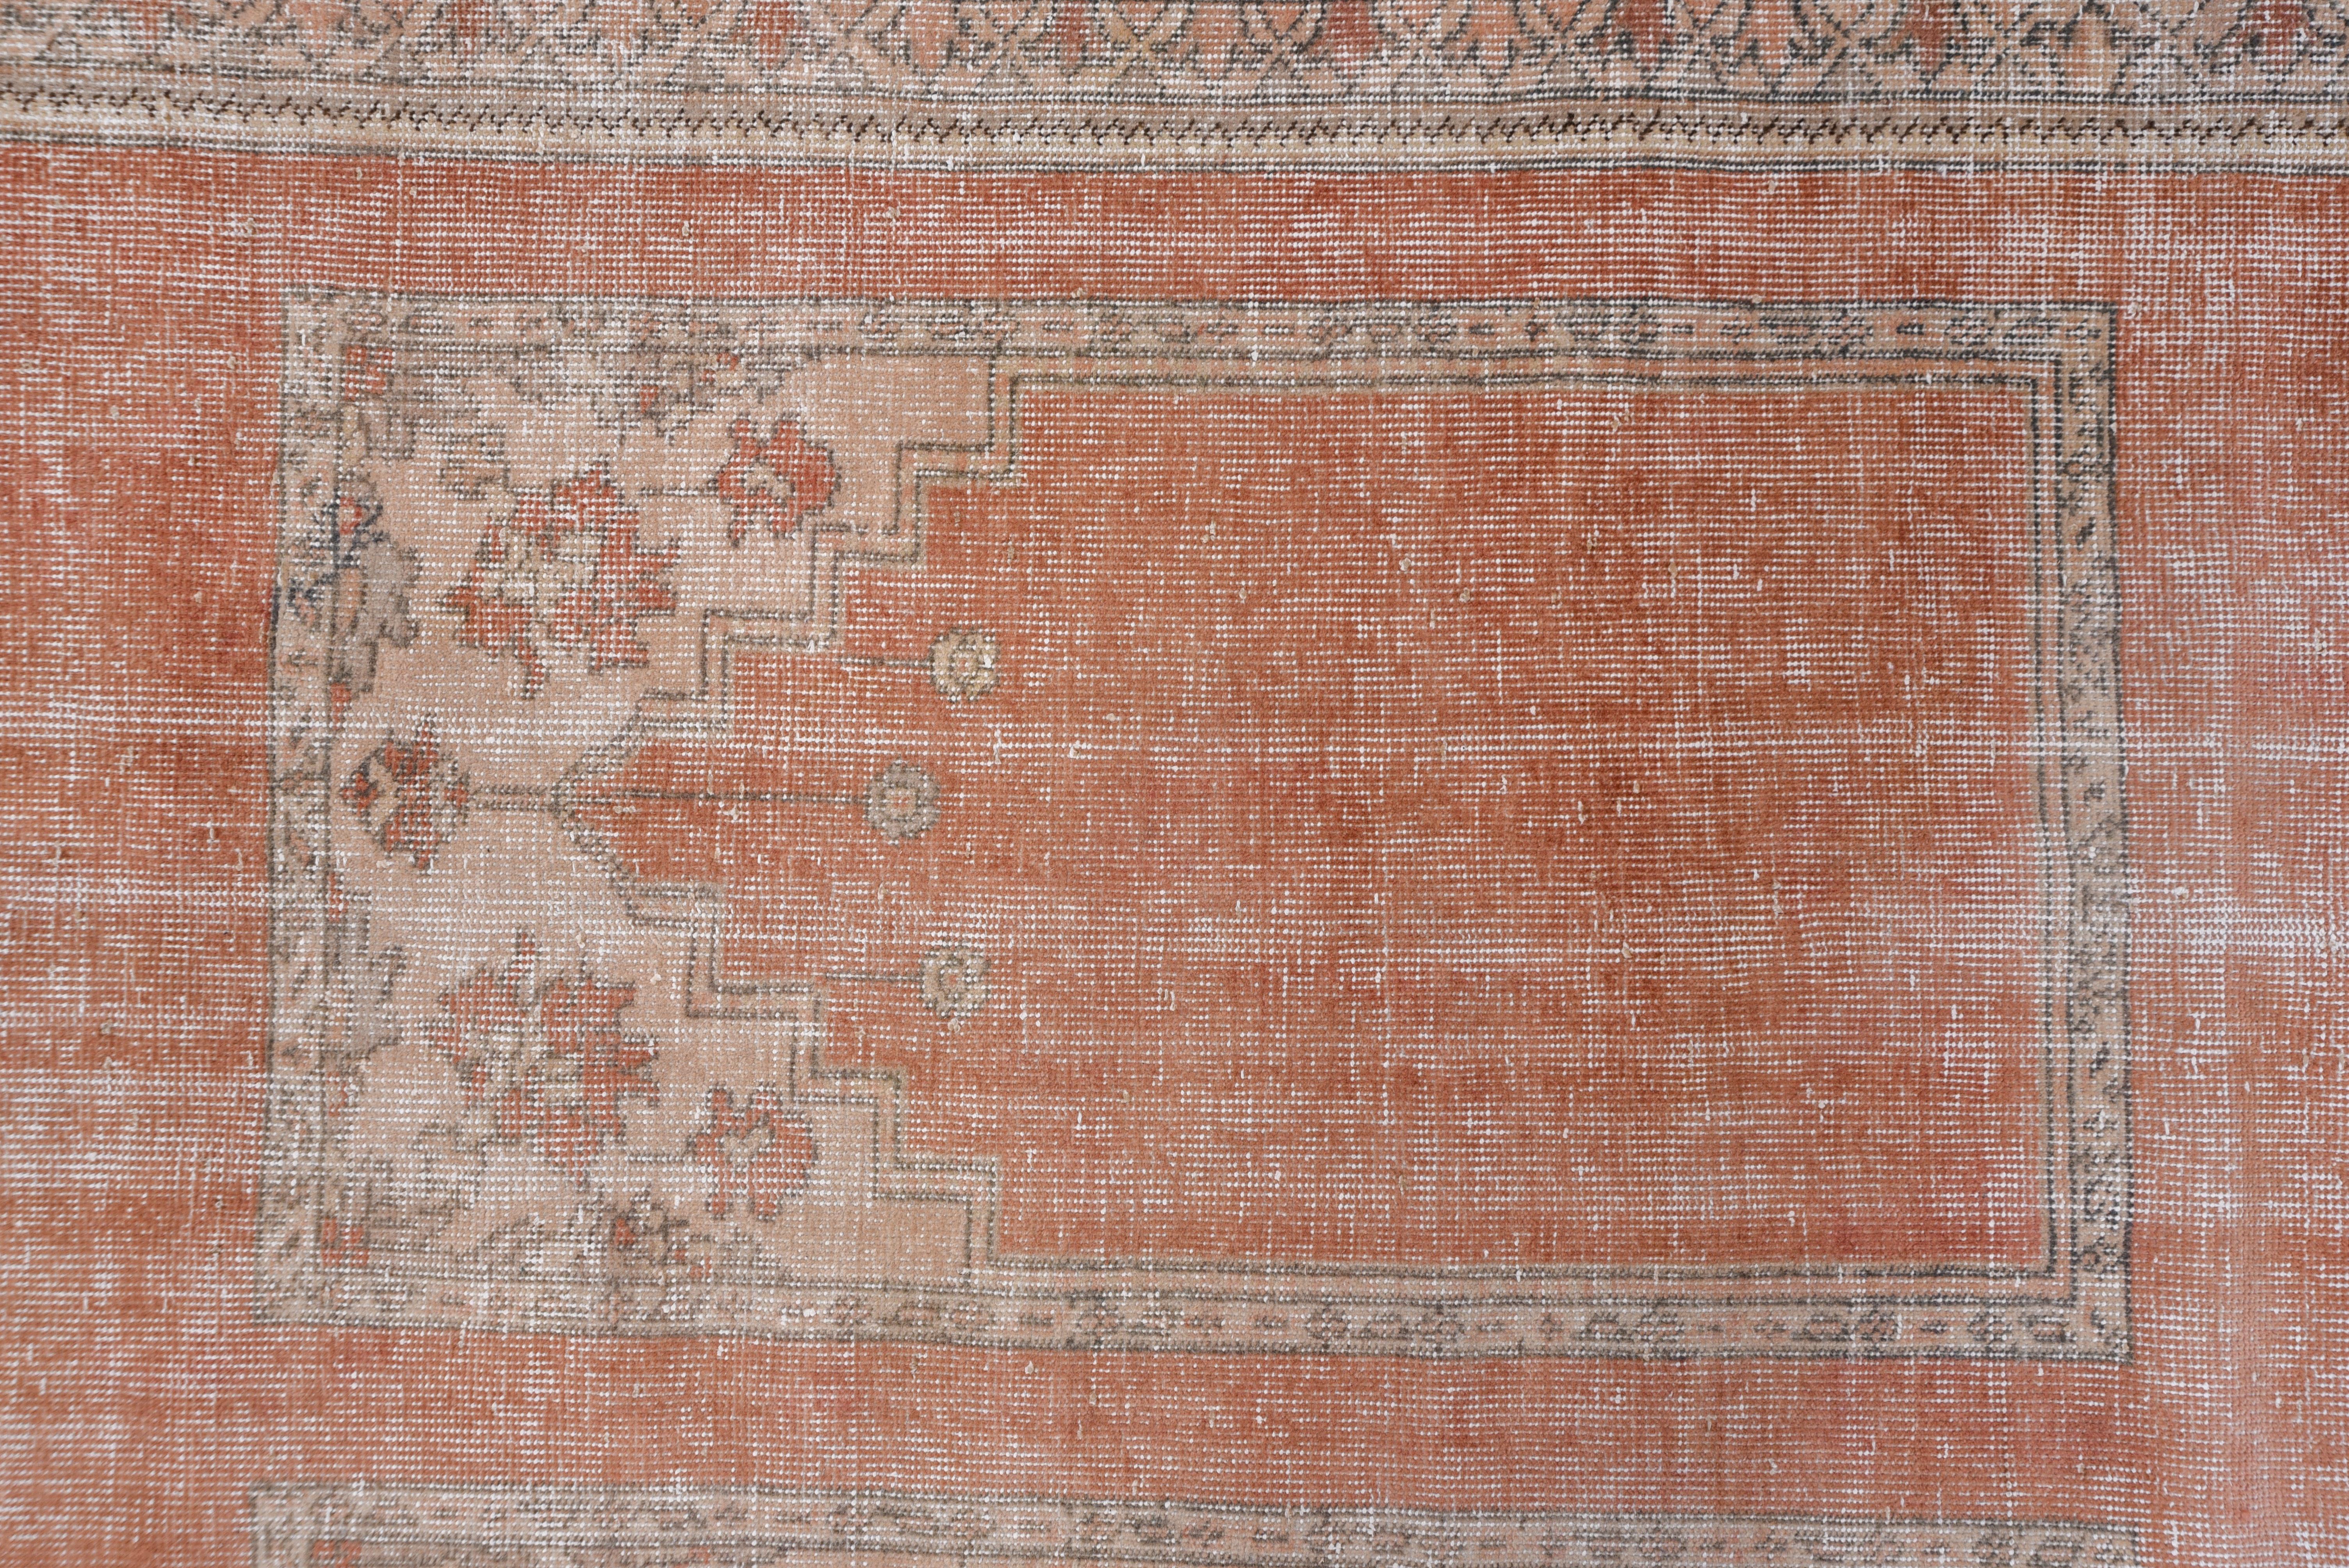 Hand-Knotted Antique Distressed Turkish Orange Oushak Carpet